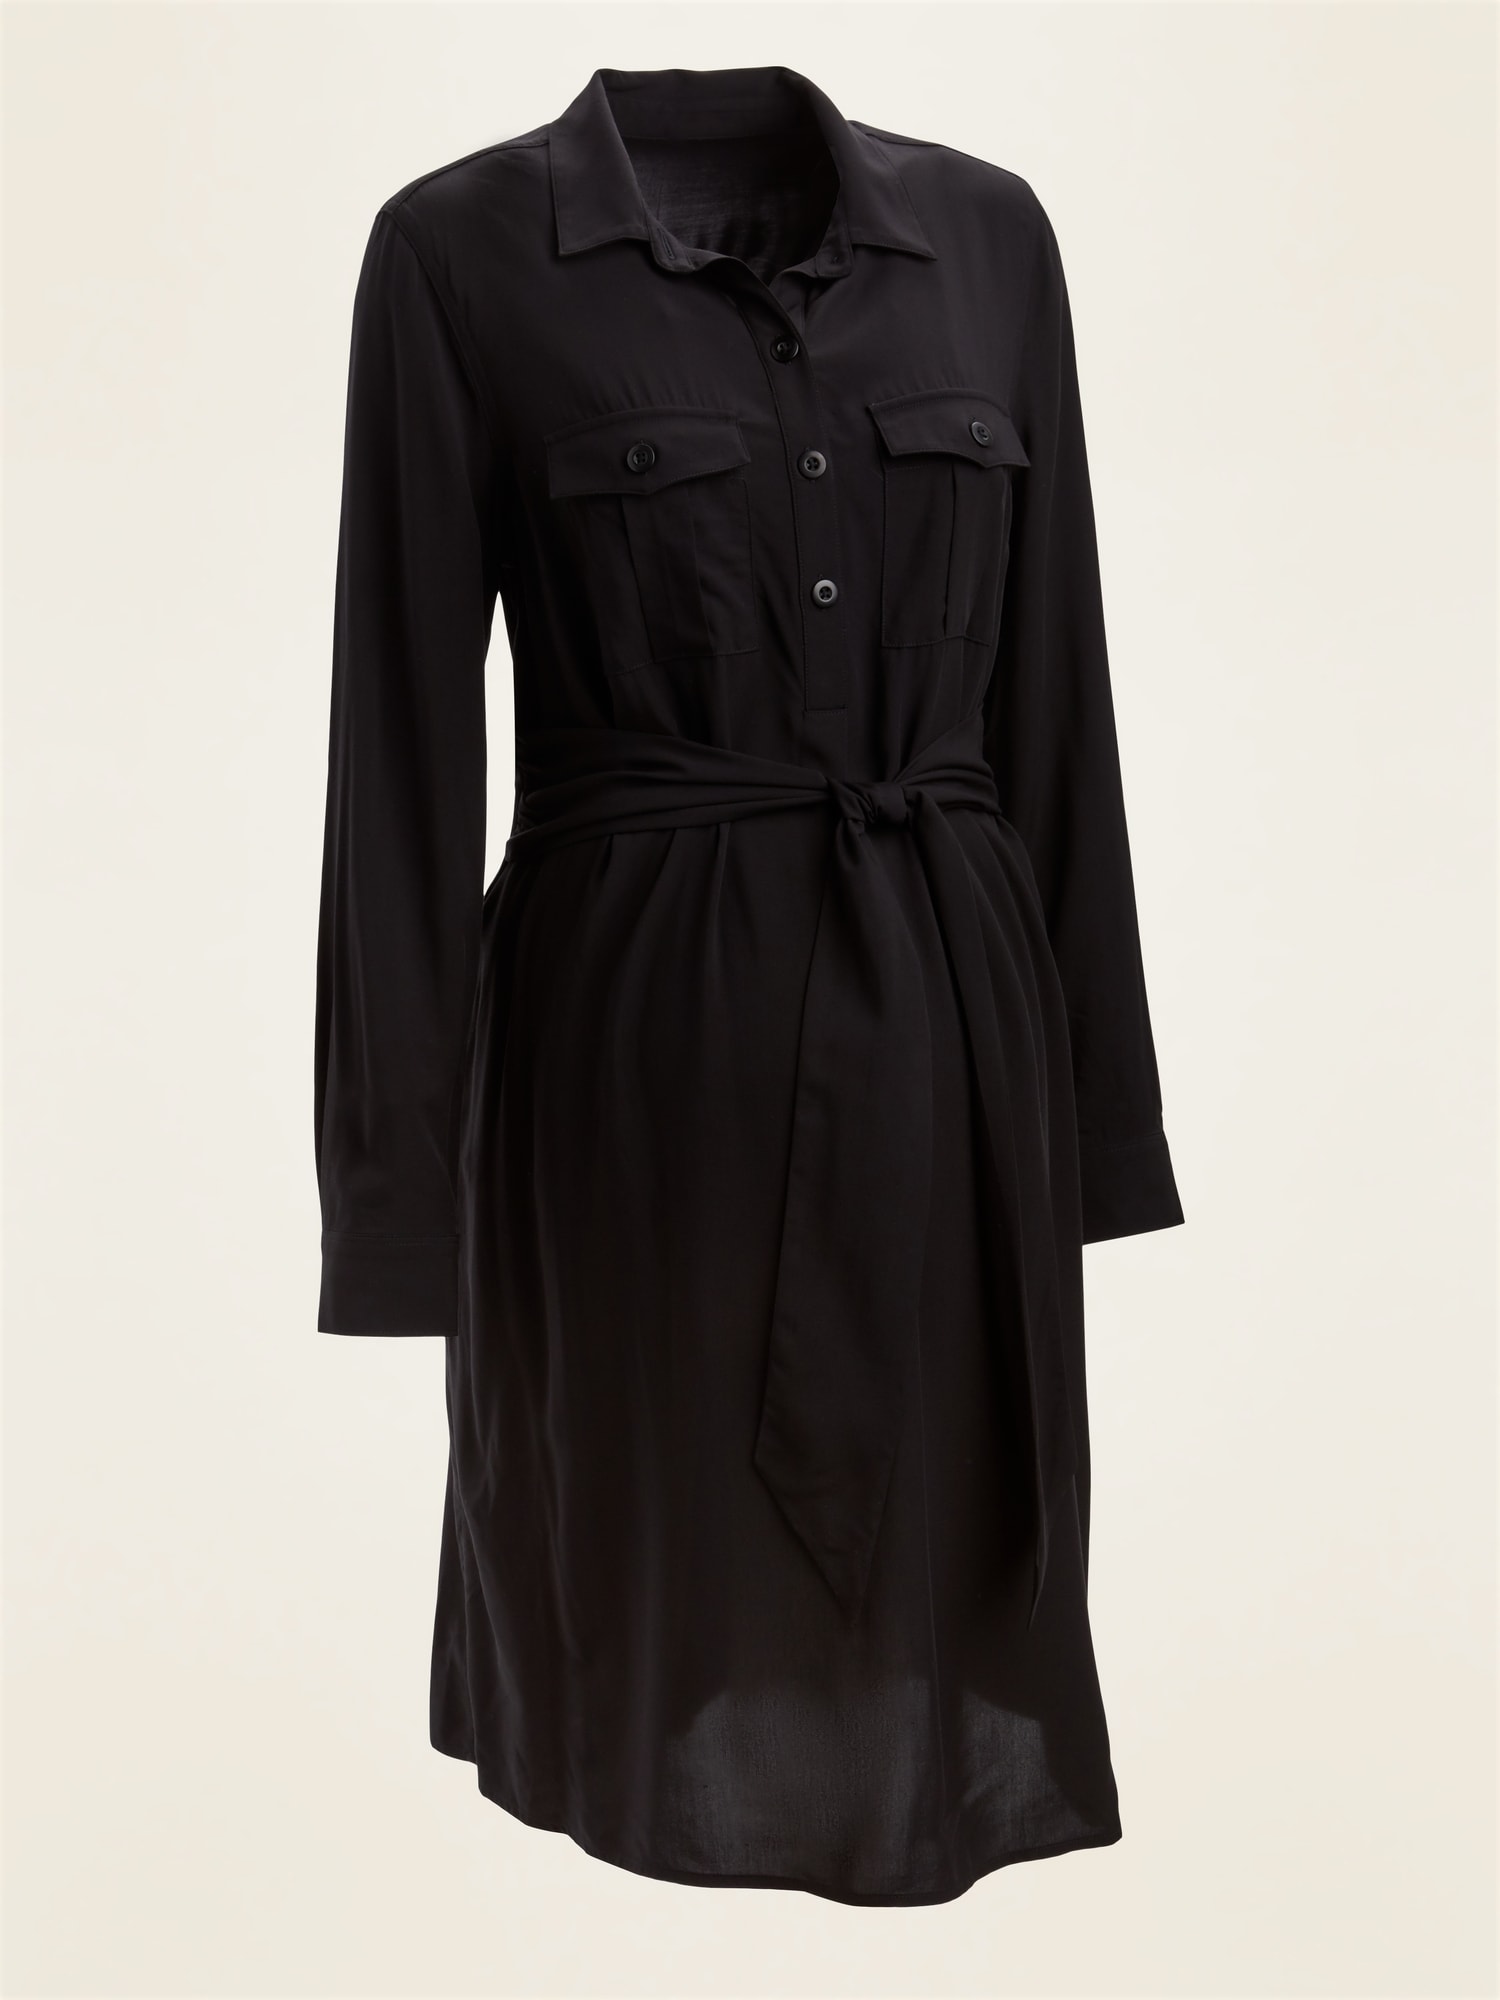 old navy black shirt dress